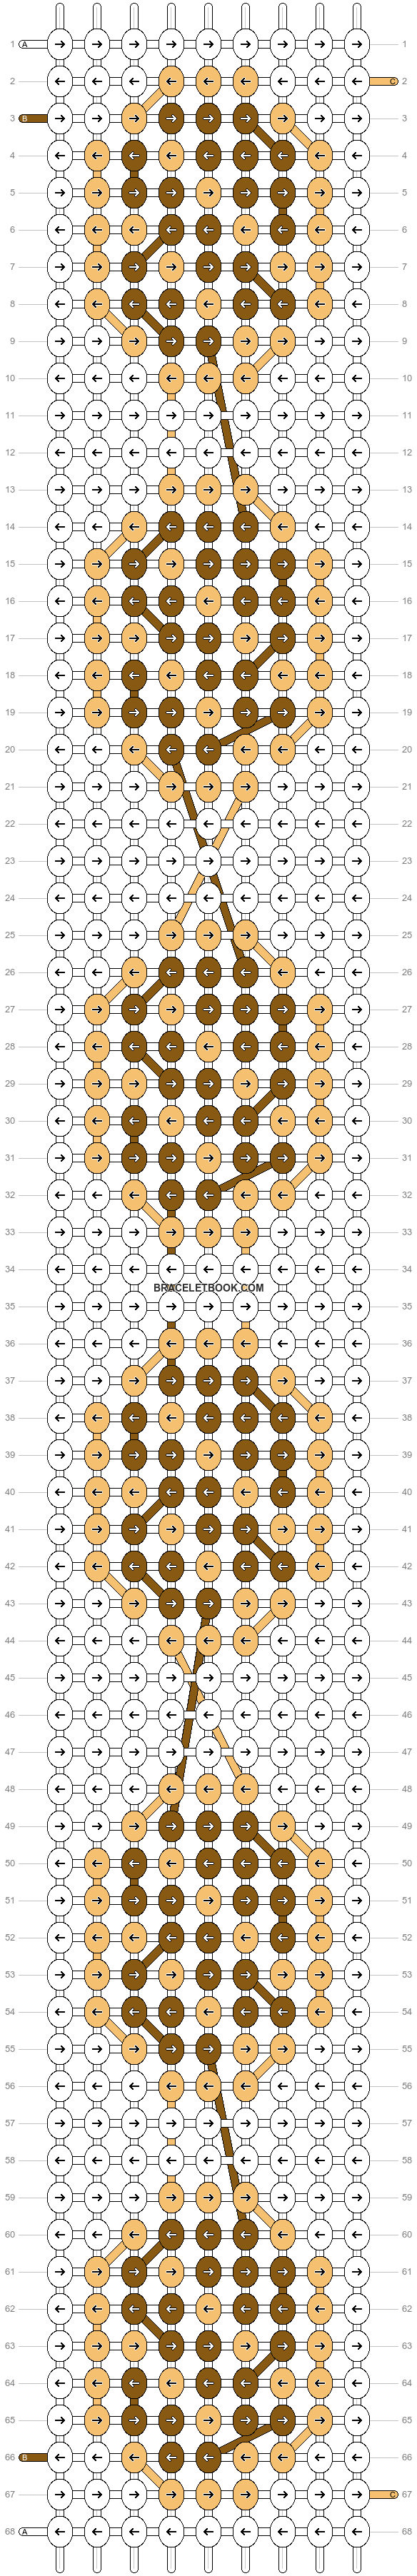 Alpha pattern #49644 variation #78247 pattern